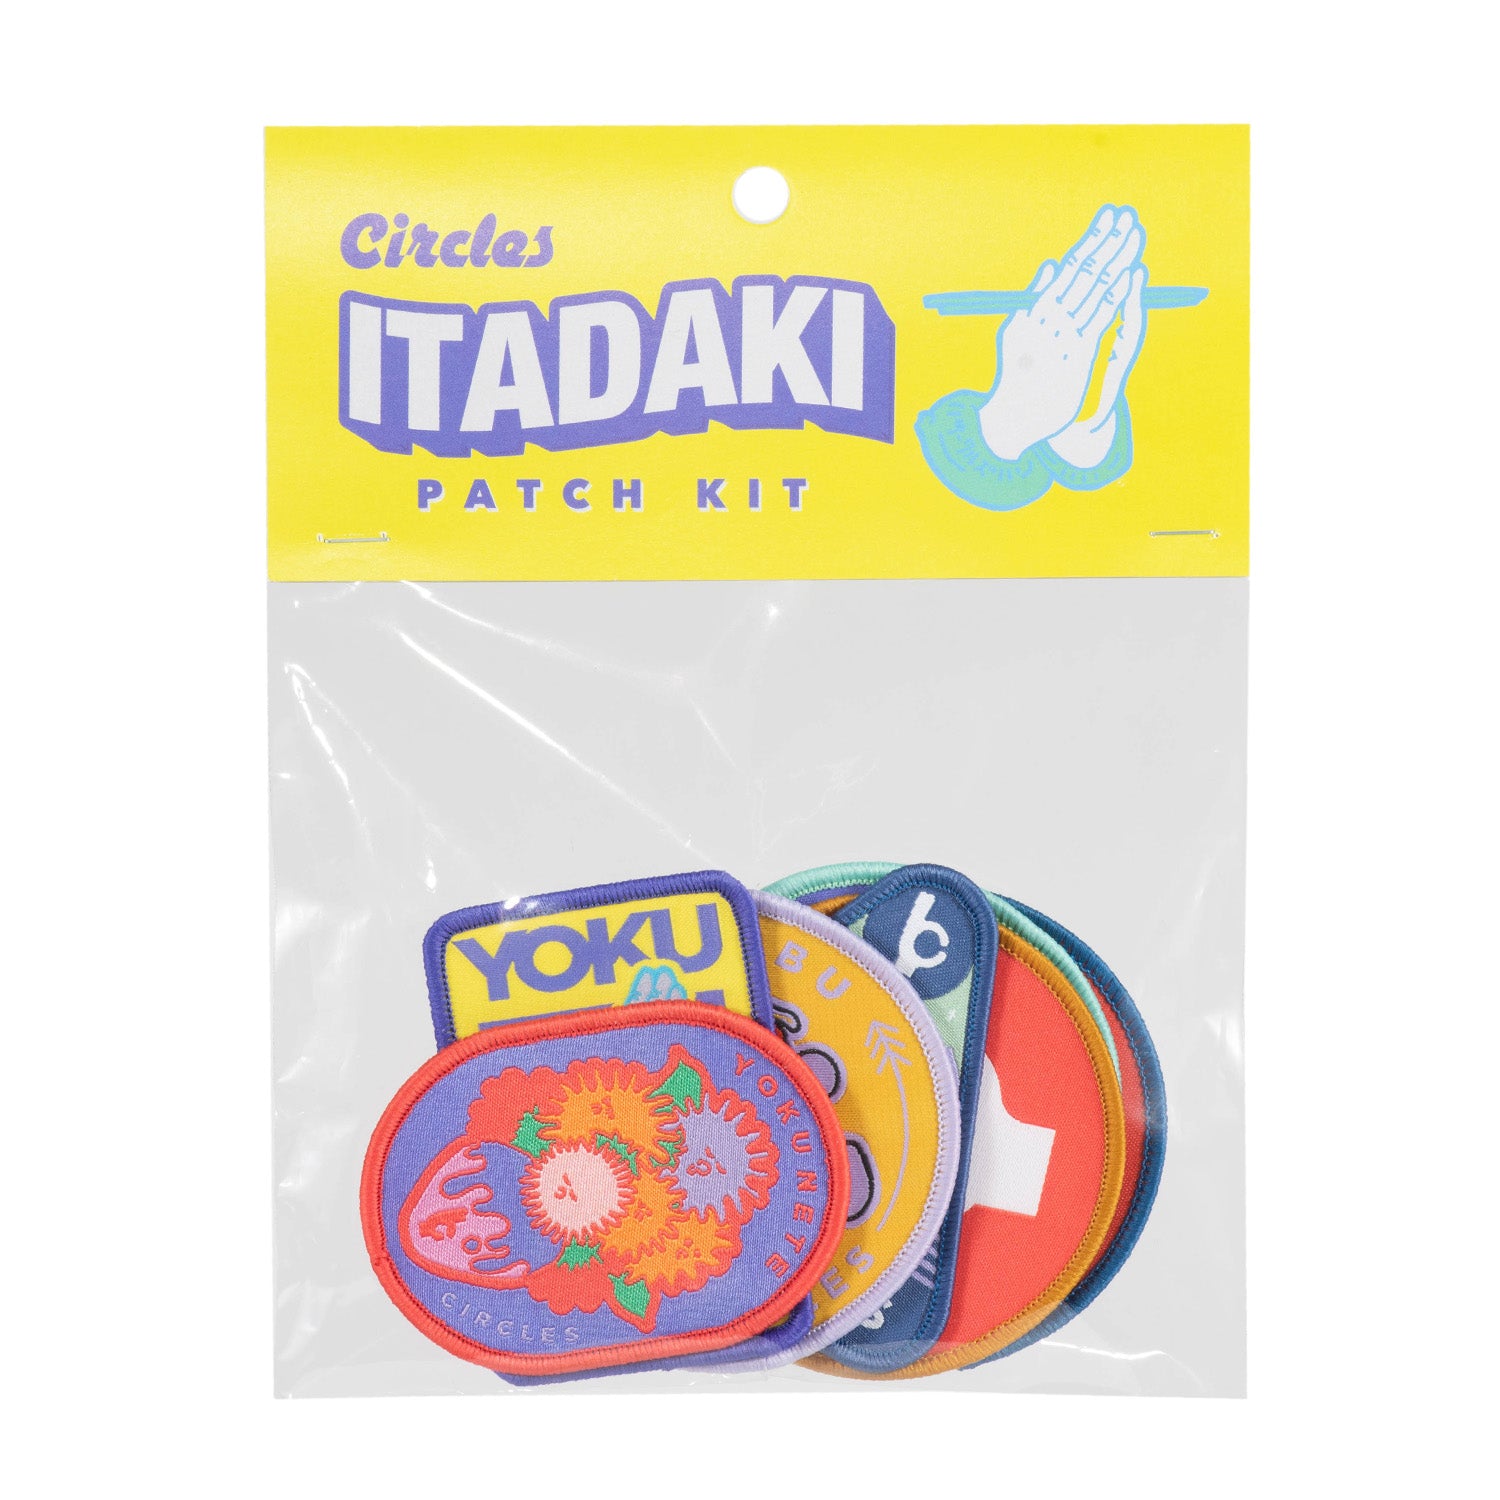 CIRCLES ORIGINAL Itadaki Patch Kit